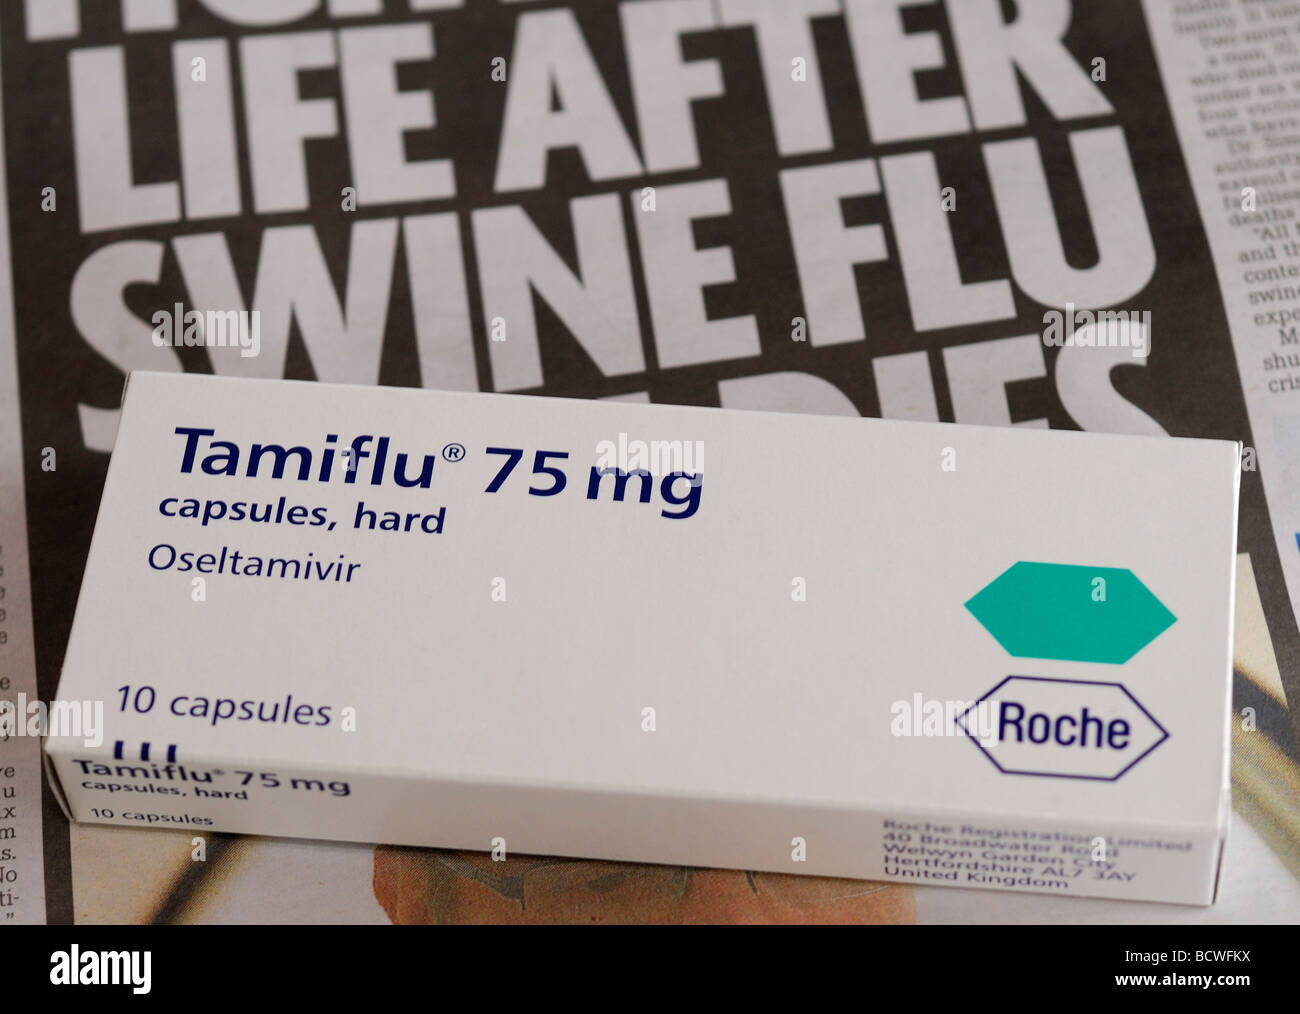 Box of Tamiflu Oseltamivir Tablets for treating Swine Flu Stock Photo